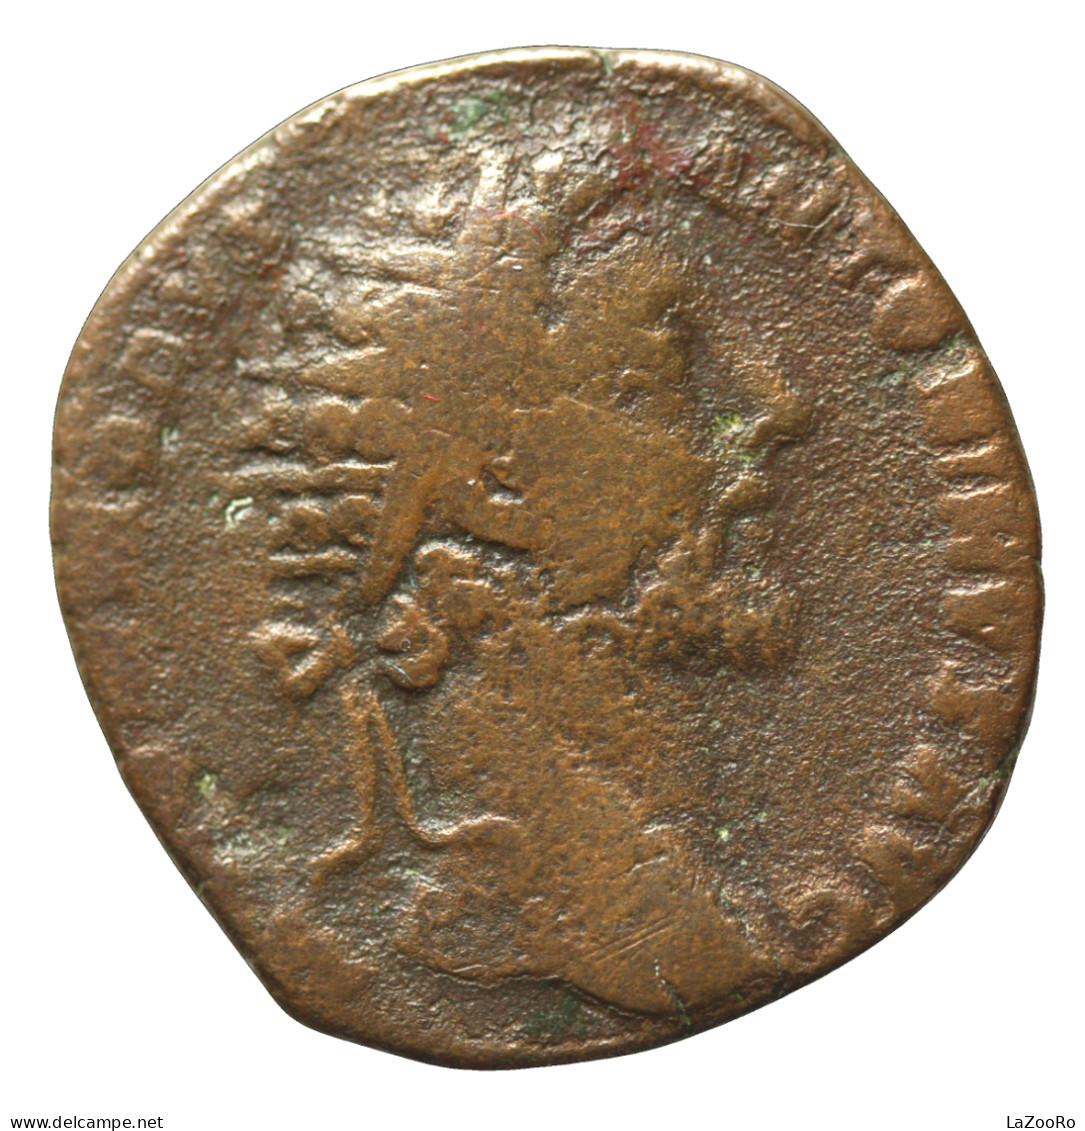 LaZooRo: Roman Empire - AE Sestertius Of Commodus (177-192 AD), Roma - The Anthonines (96 AD Tot 192 AD)